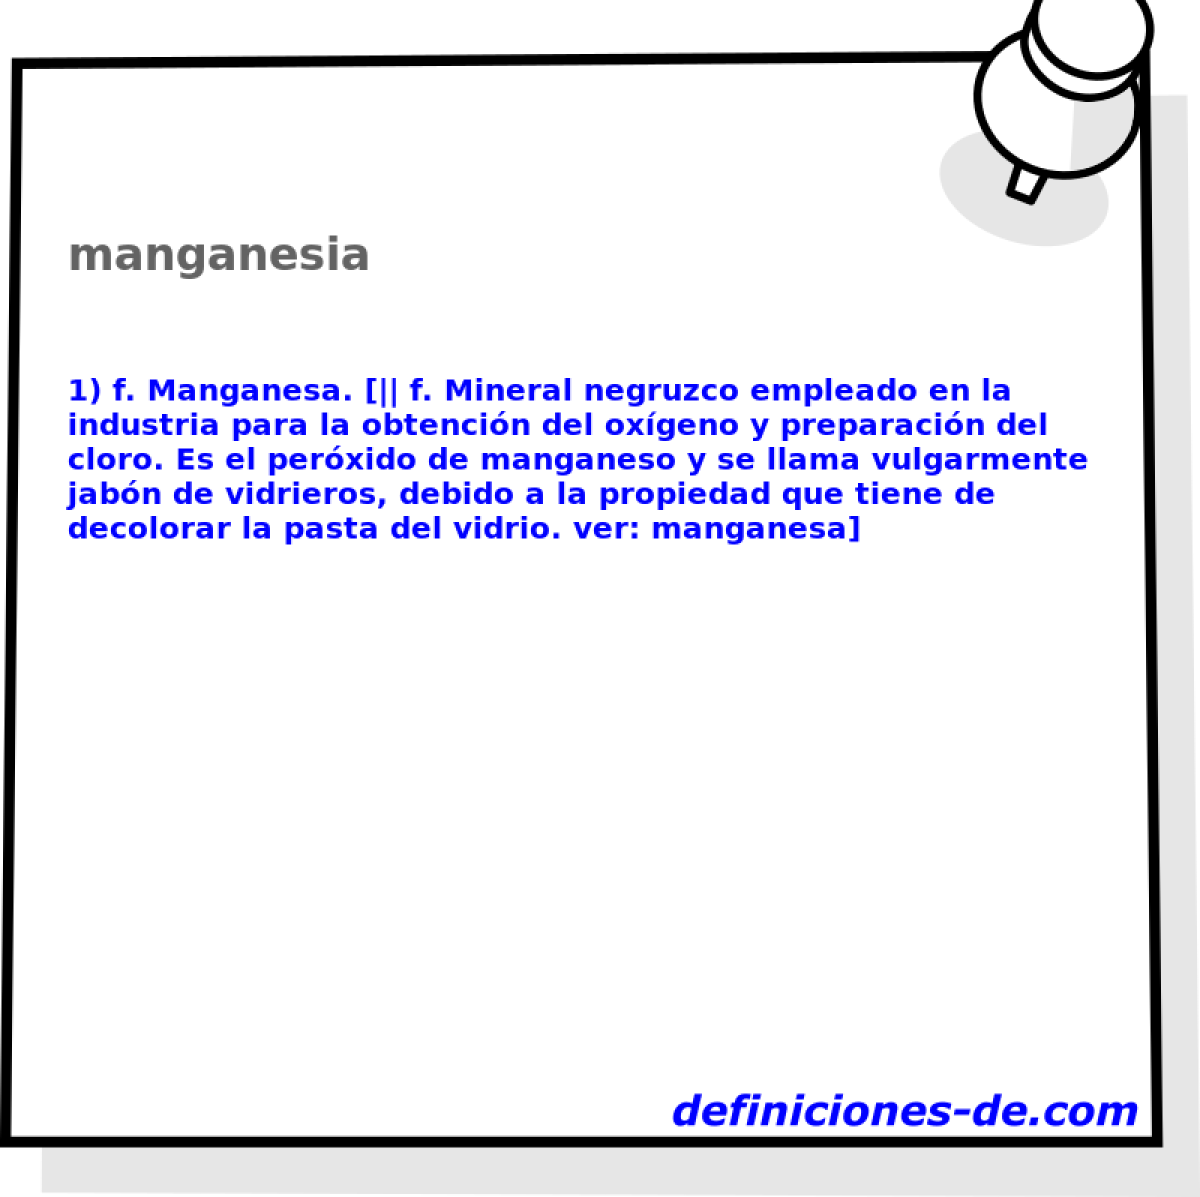 manganesia 